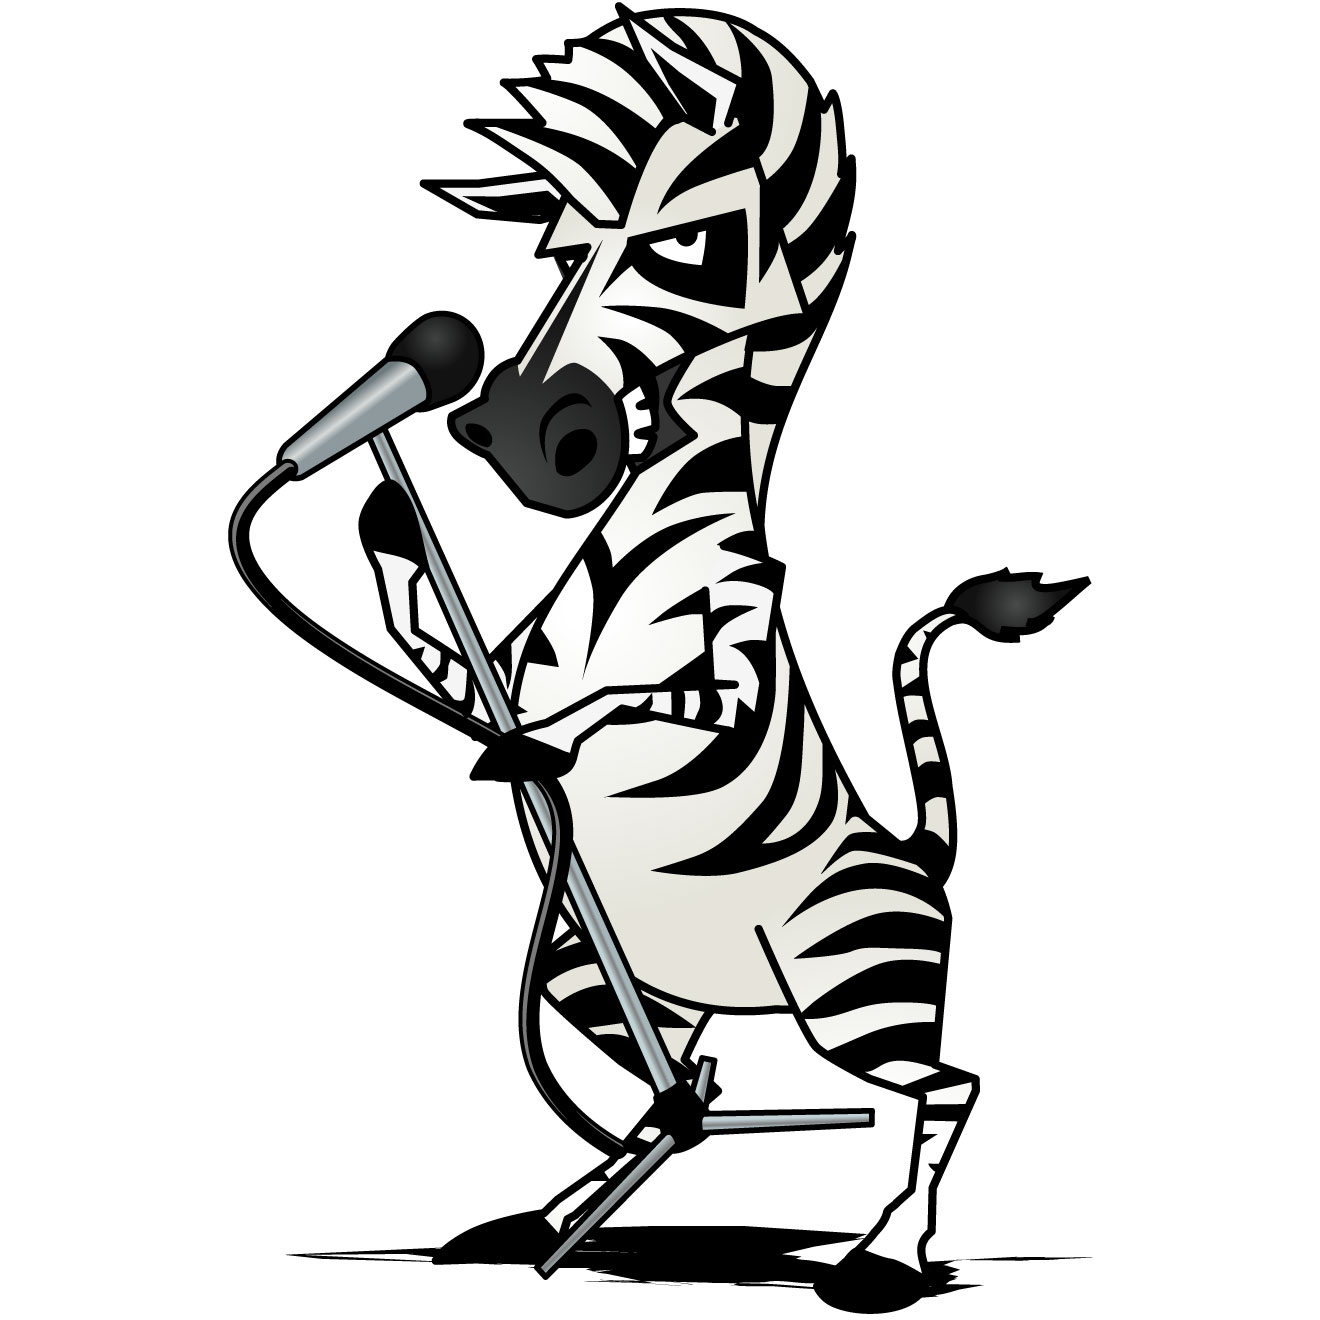 Zebra cartoon character | Flickr - Photo Sharing!